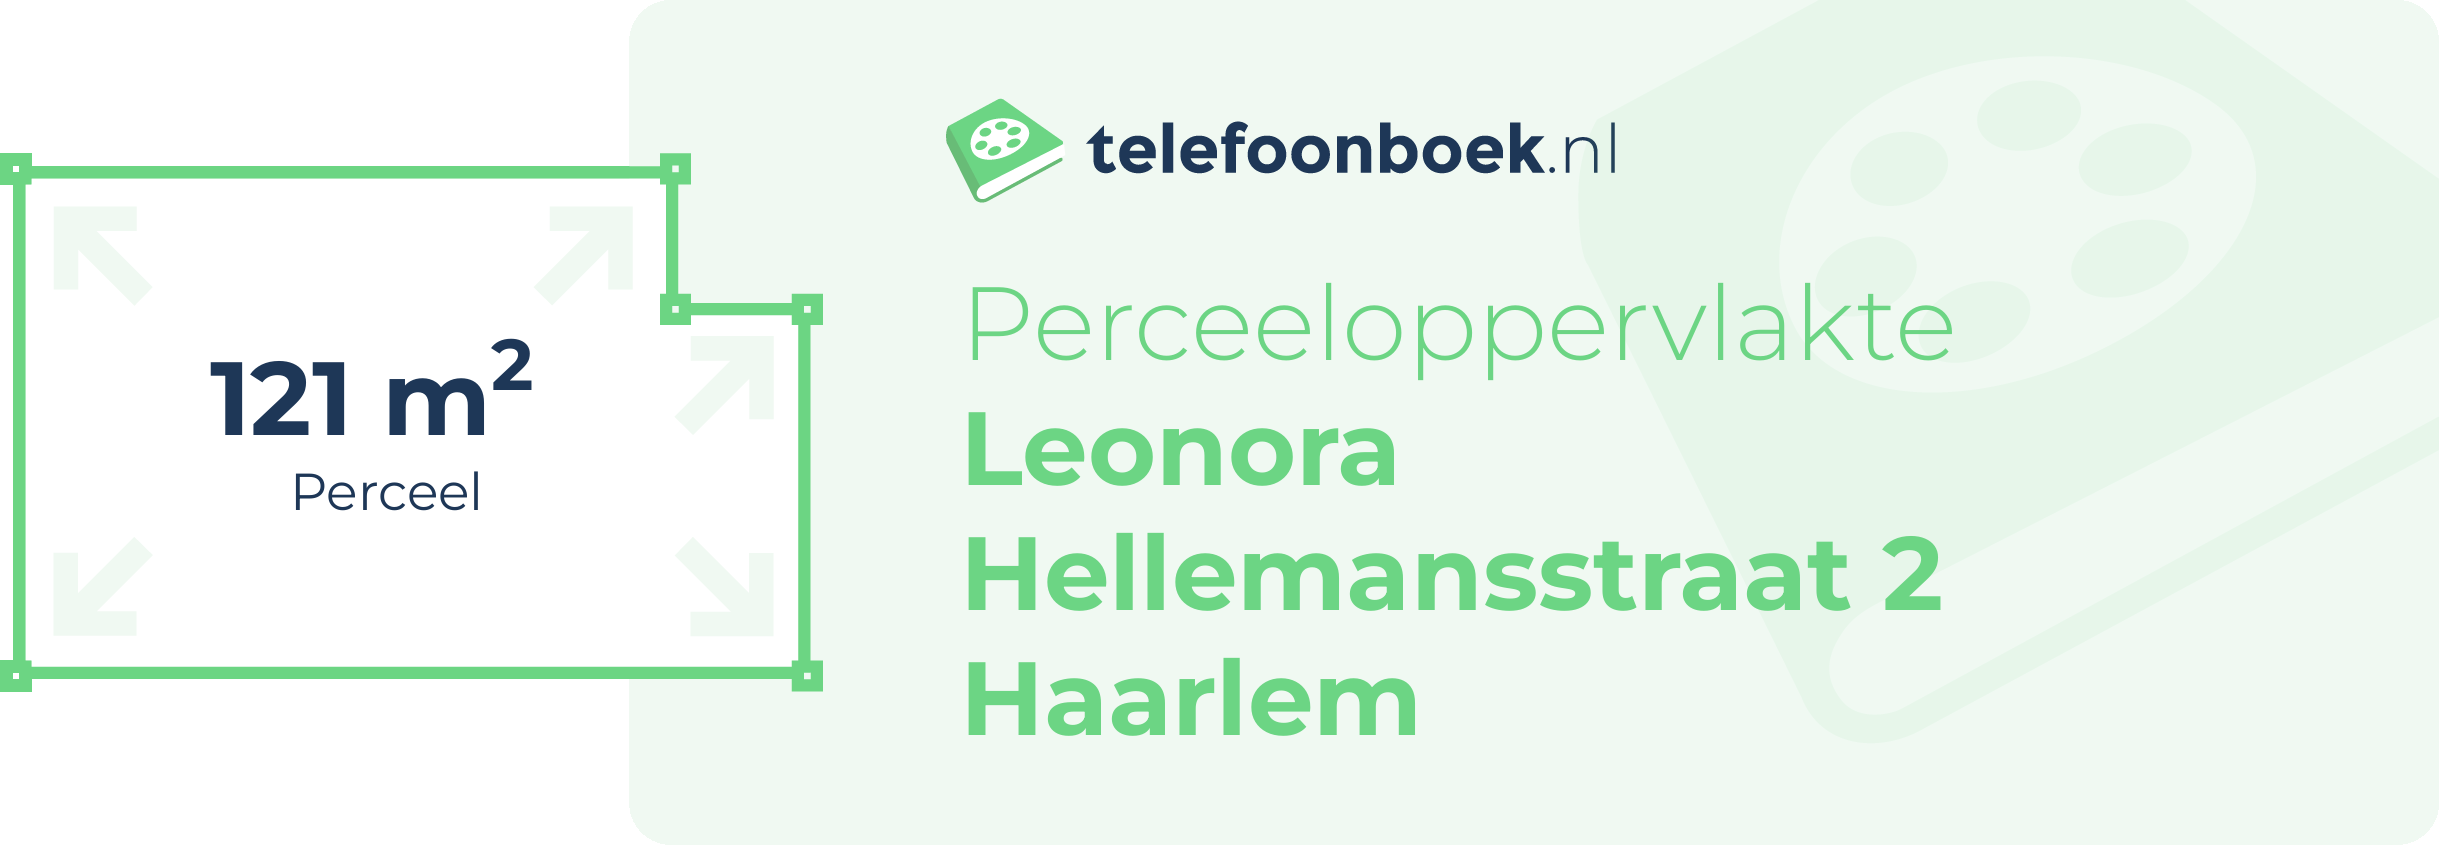 Perceeloppervlakte Leonora Hellemansstraat 2 Haarlem